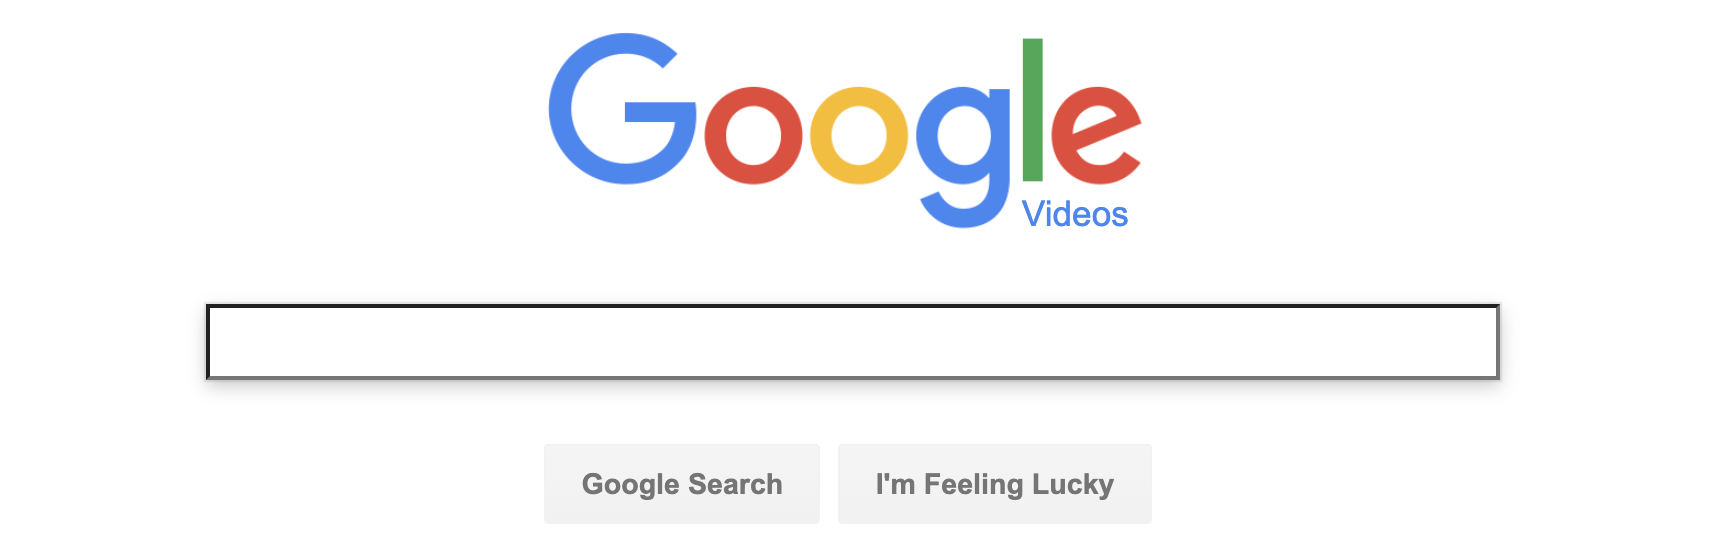 google-video-banner